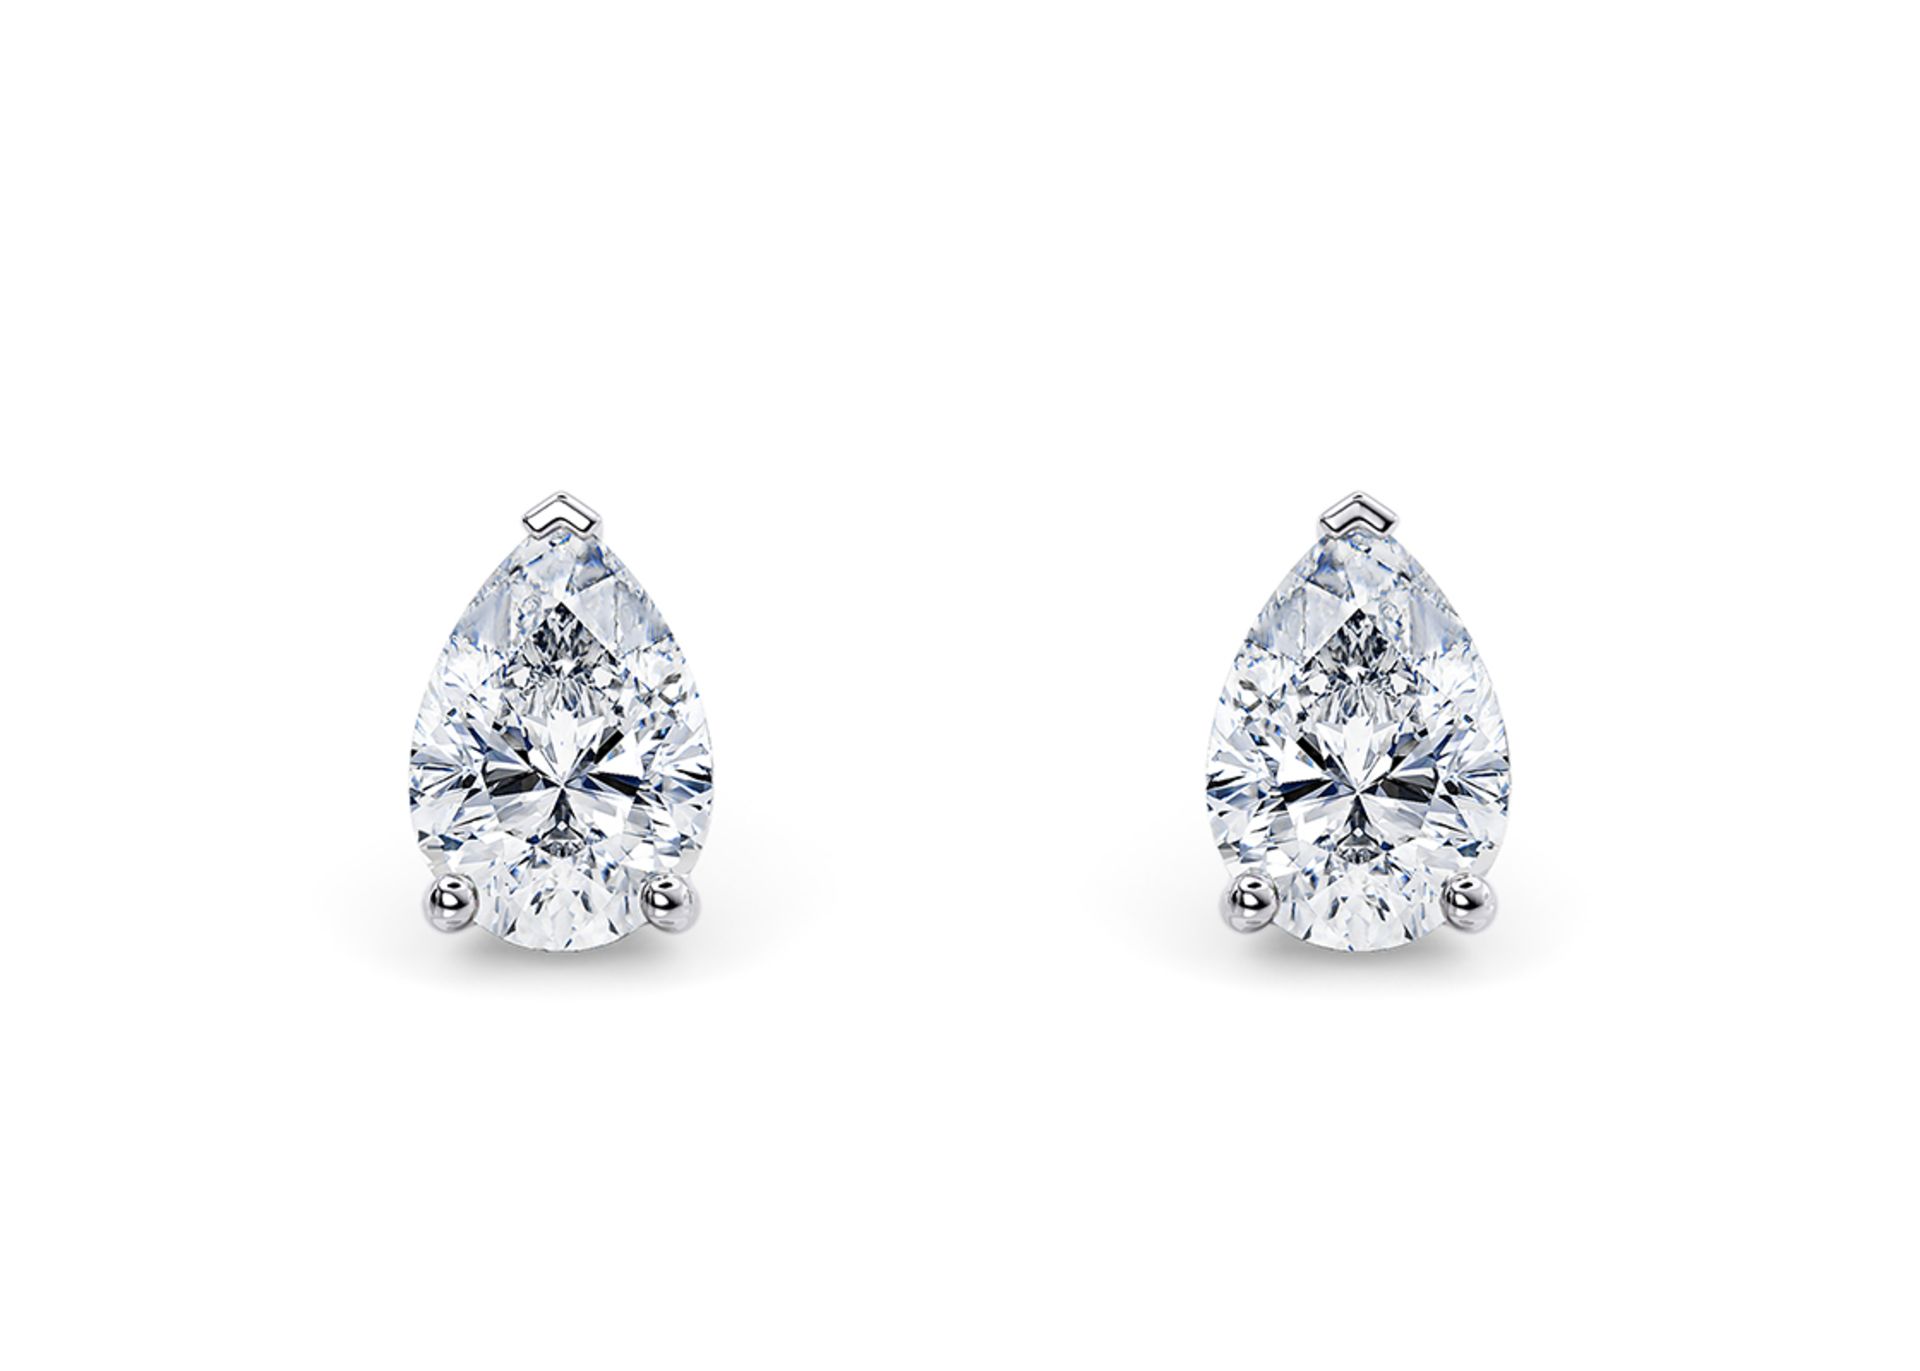 ** ON SALE ** Pear Cut Cut 4.00 Carat Diamond 18kt White Gold Earrings- E Colour VS Clarity IGI